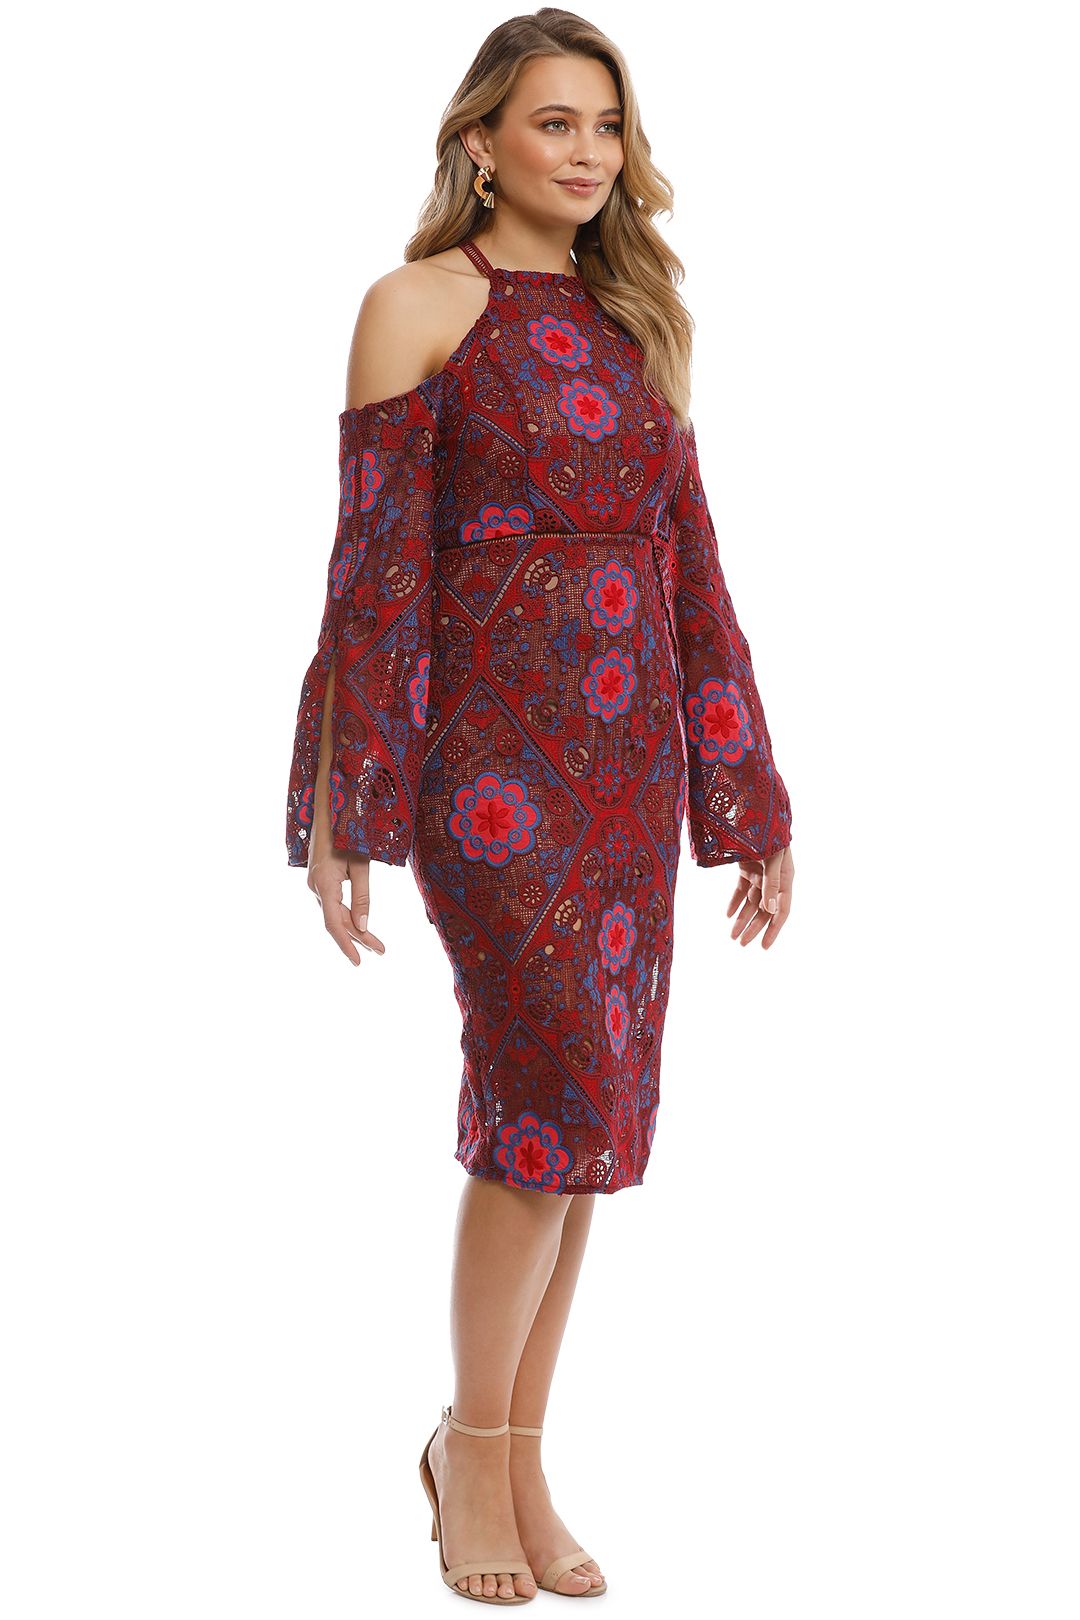 Elliatt - Renaissance Dress - Red Floral - Side